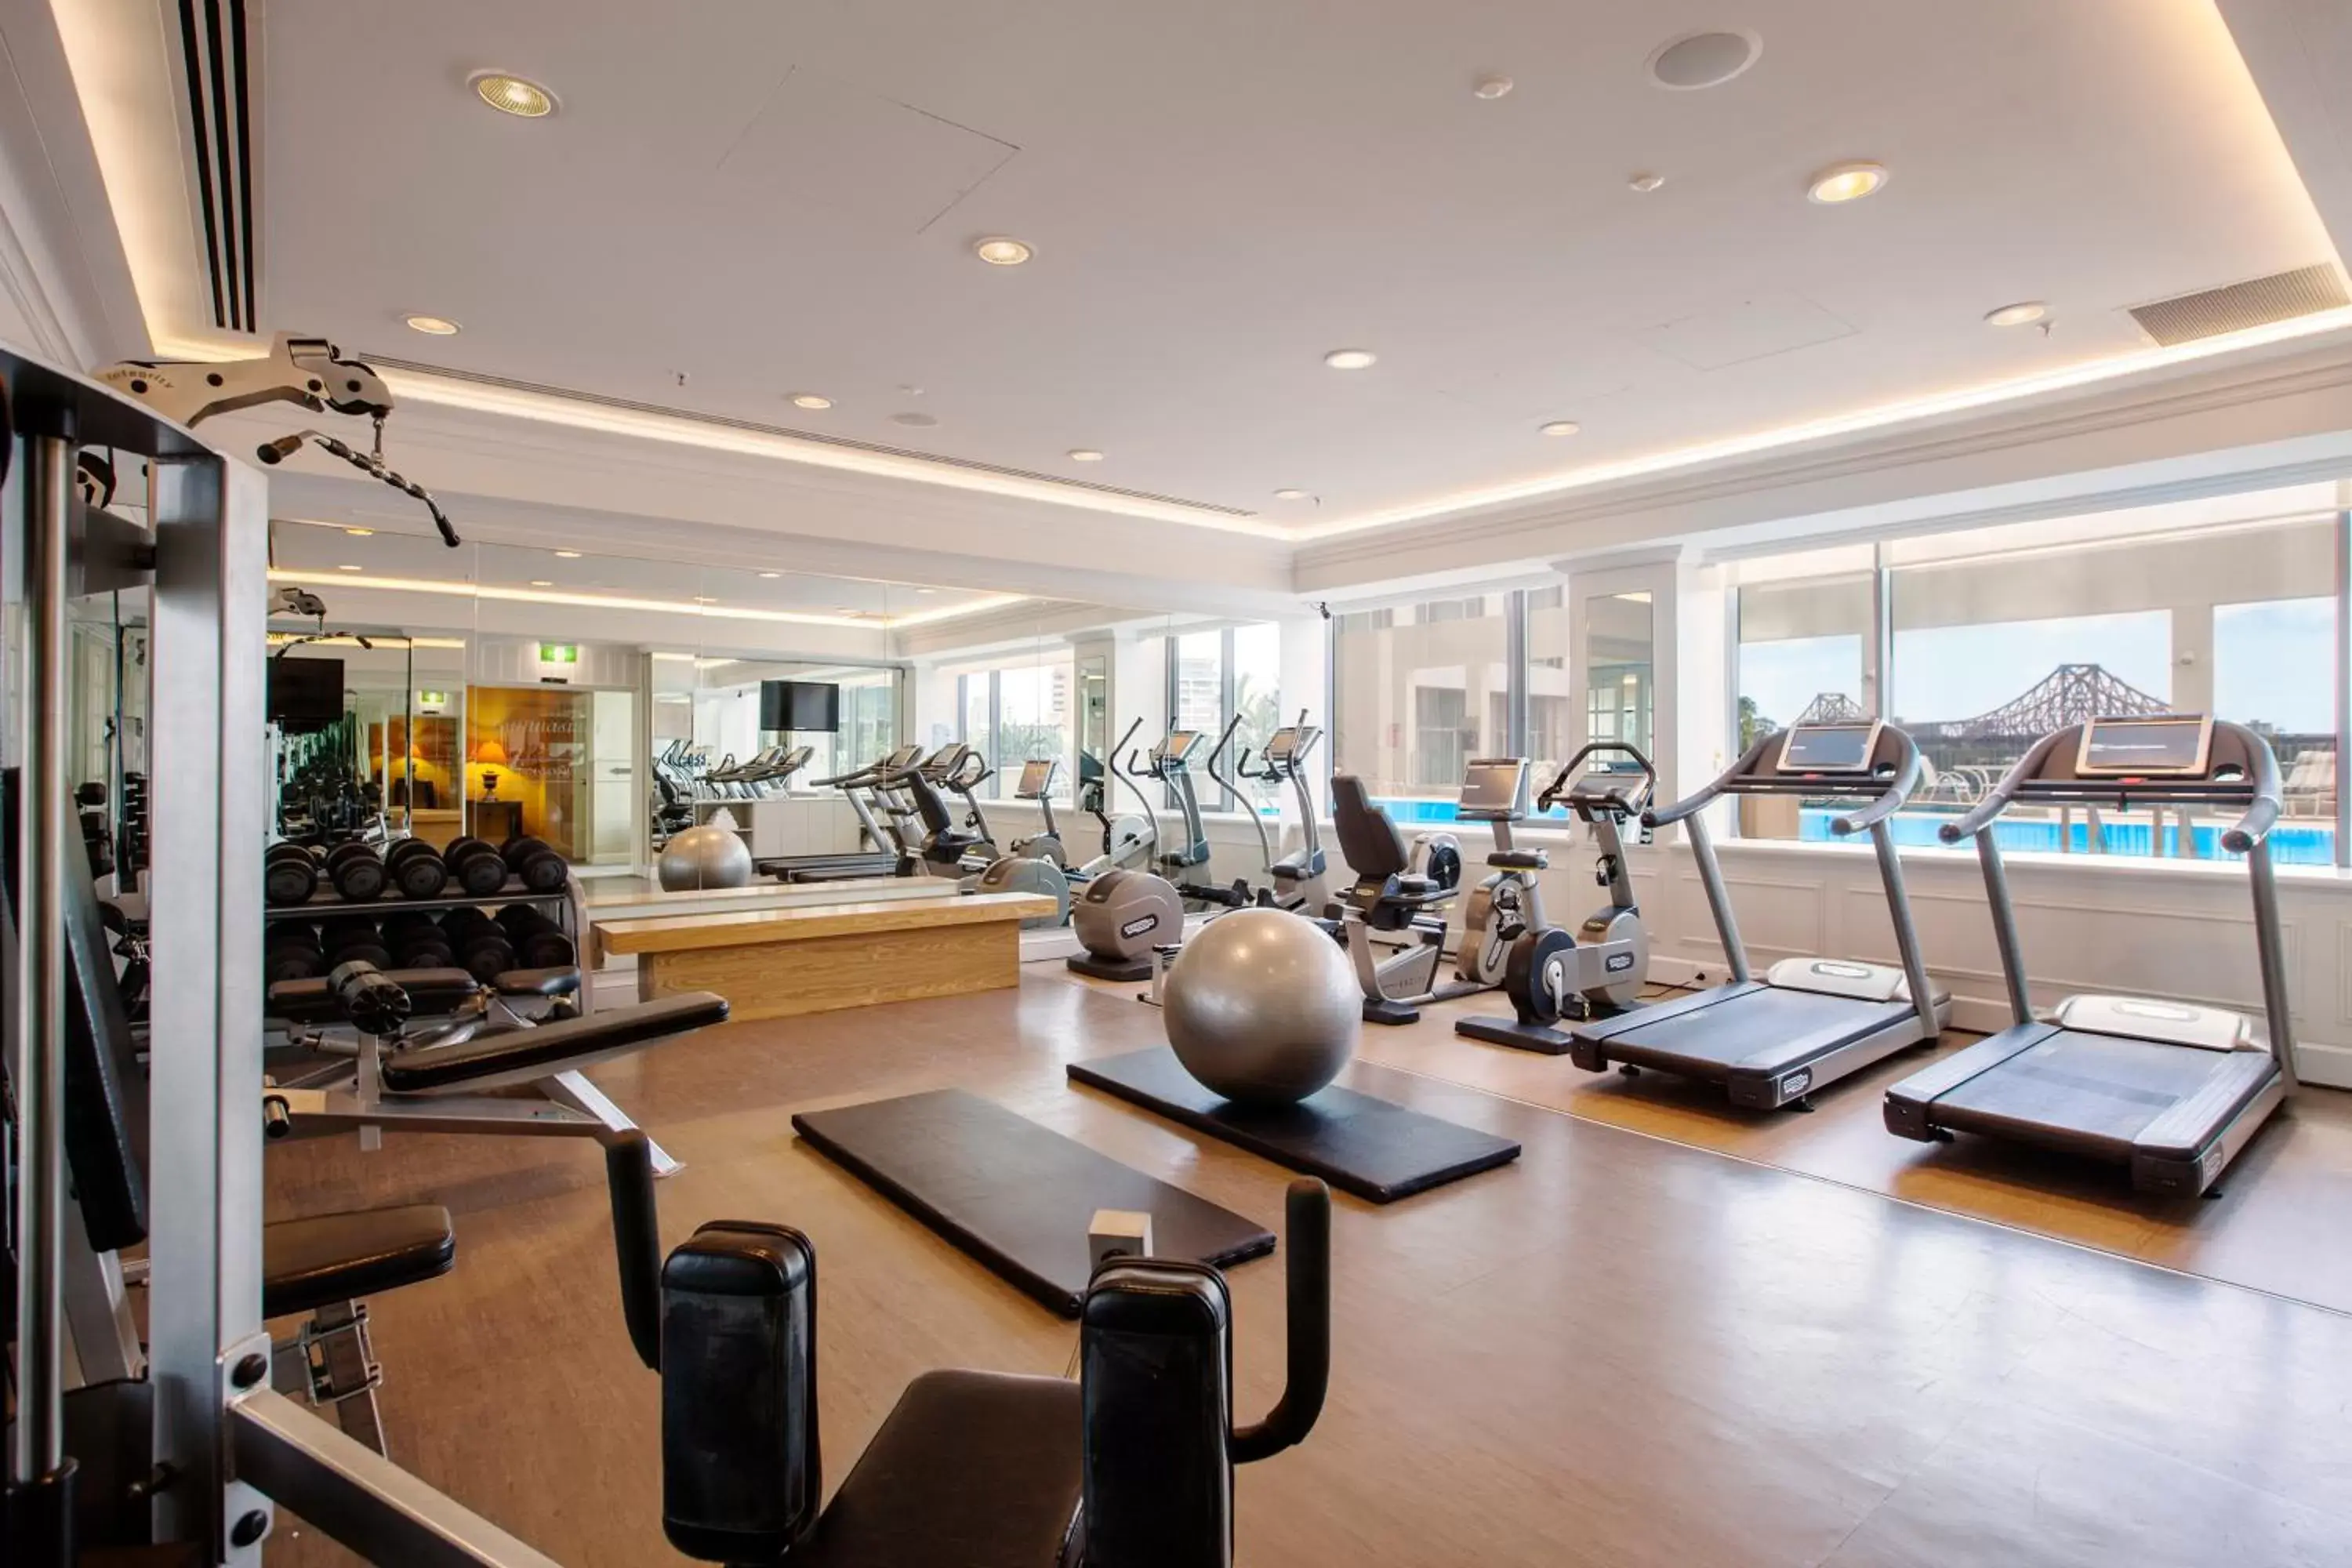 Fitness centre/facilities, Fitness Center/Facilities in Stamford Plaza Brisbane